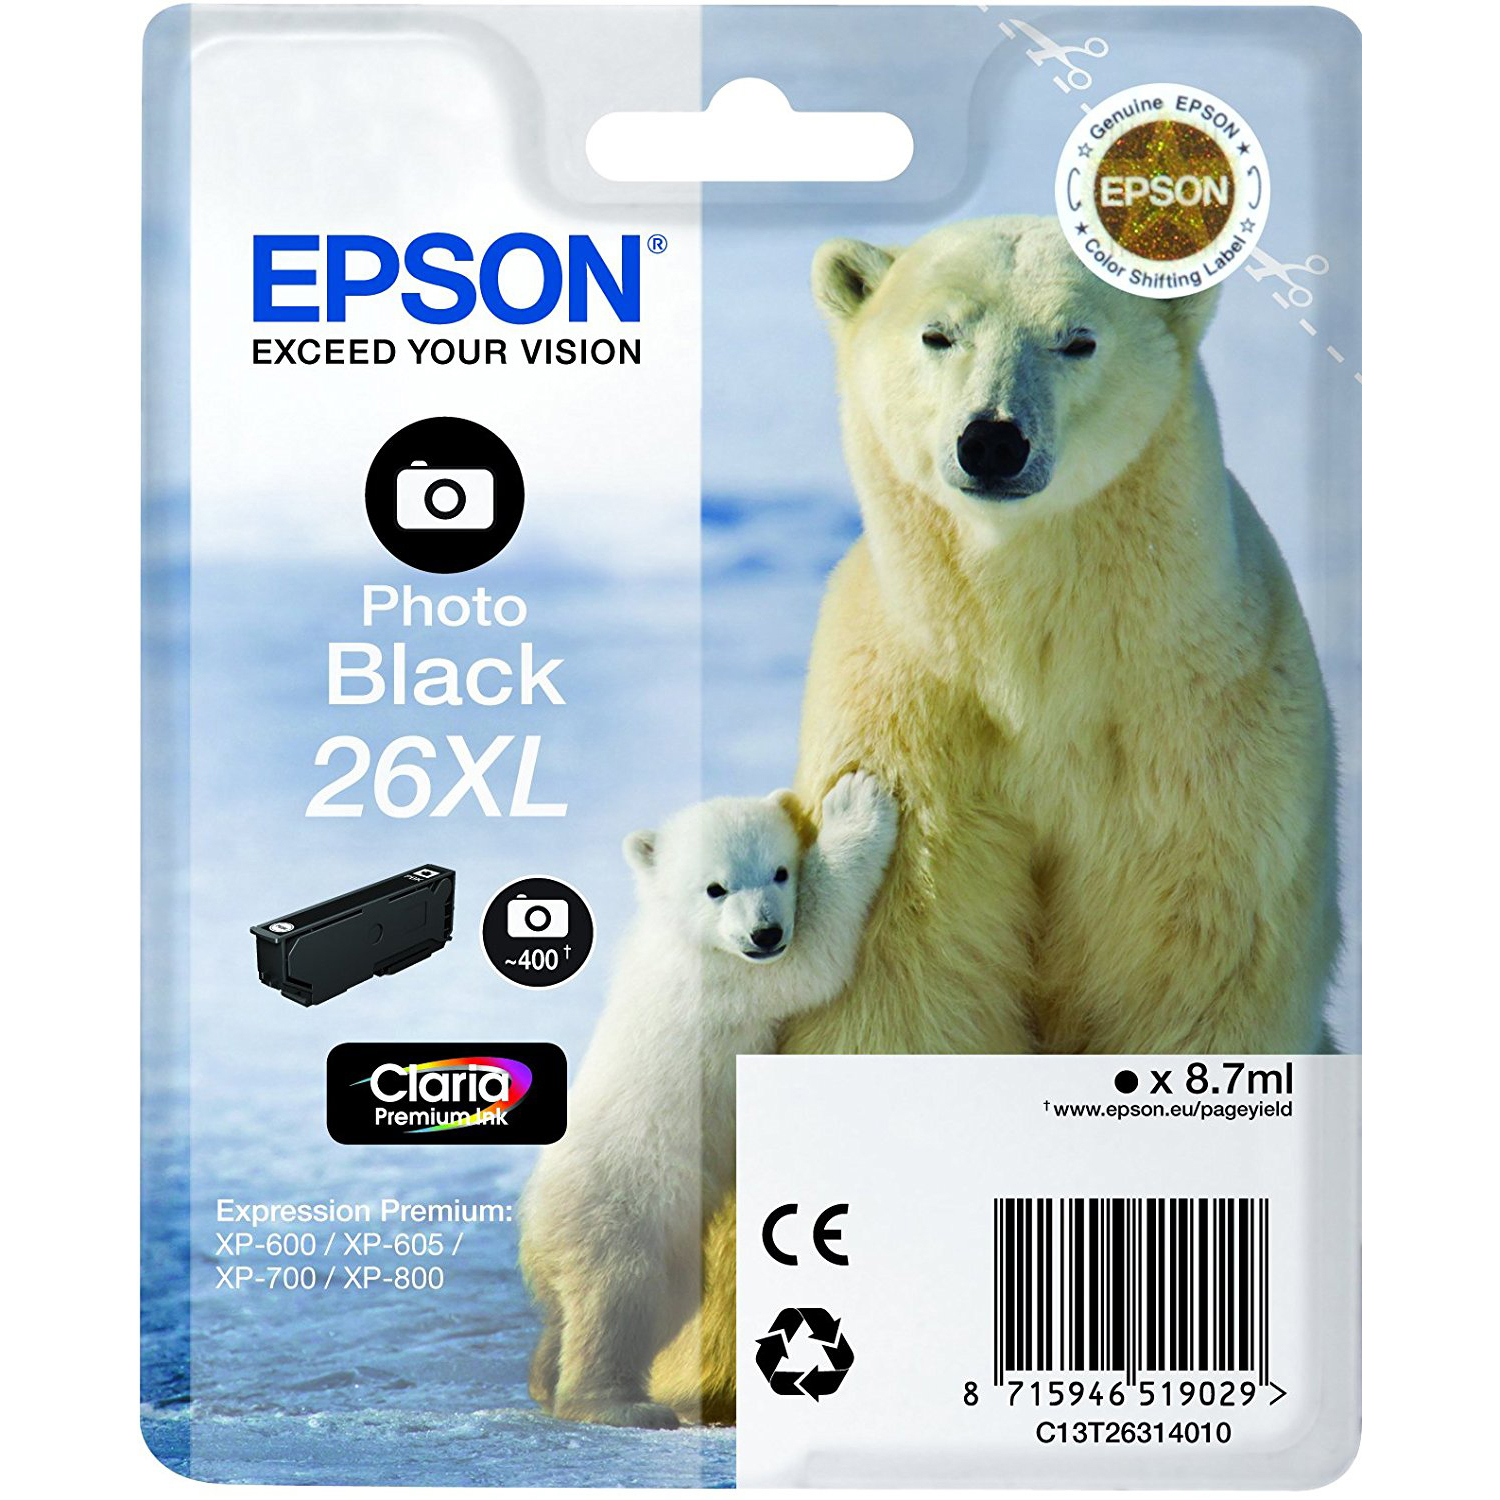 Original Epson 26XL Photo Black High Capacity Ink Cartridge (C13T26314020) T2631 Polar Bear